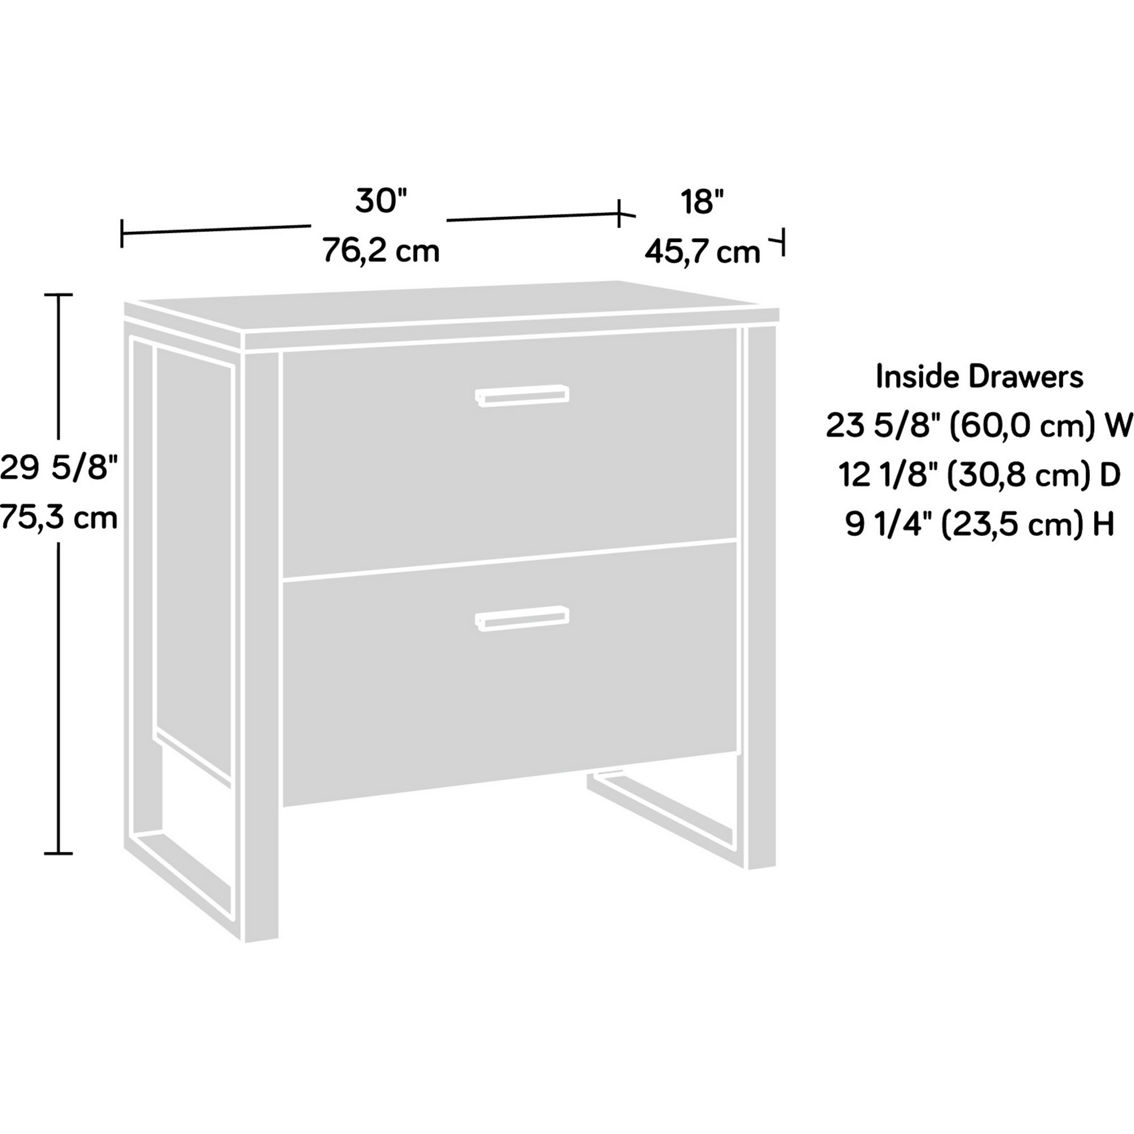 Sauder 2-Drawer Lateral File Cabinet - Image 2 of 2